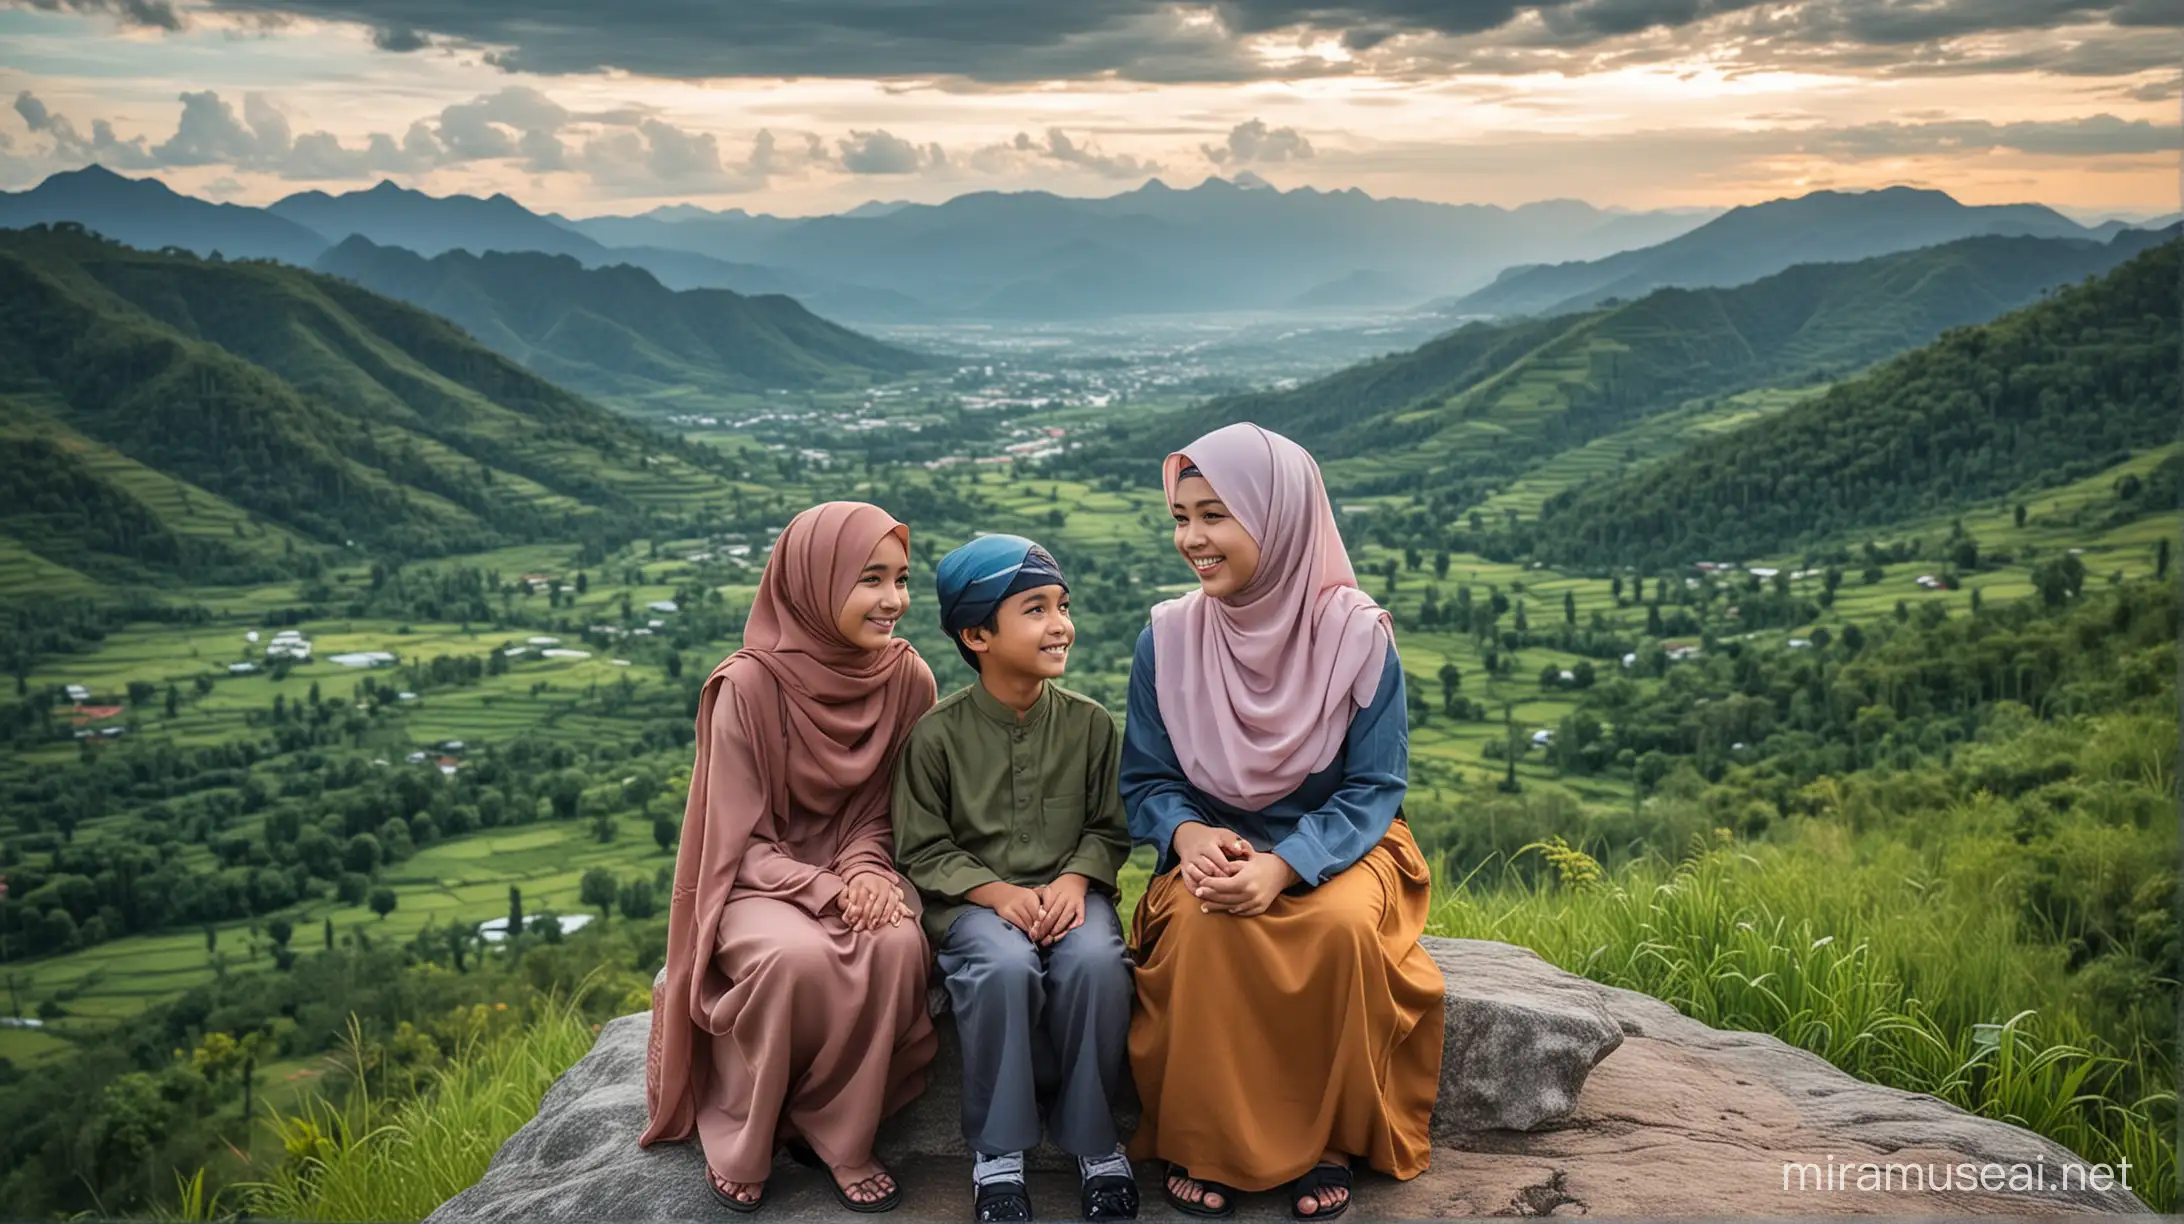 Serene Malay Family Enjoying Mountain View Smiling Couple with Children